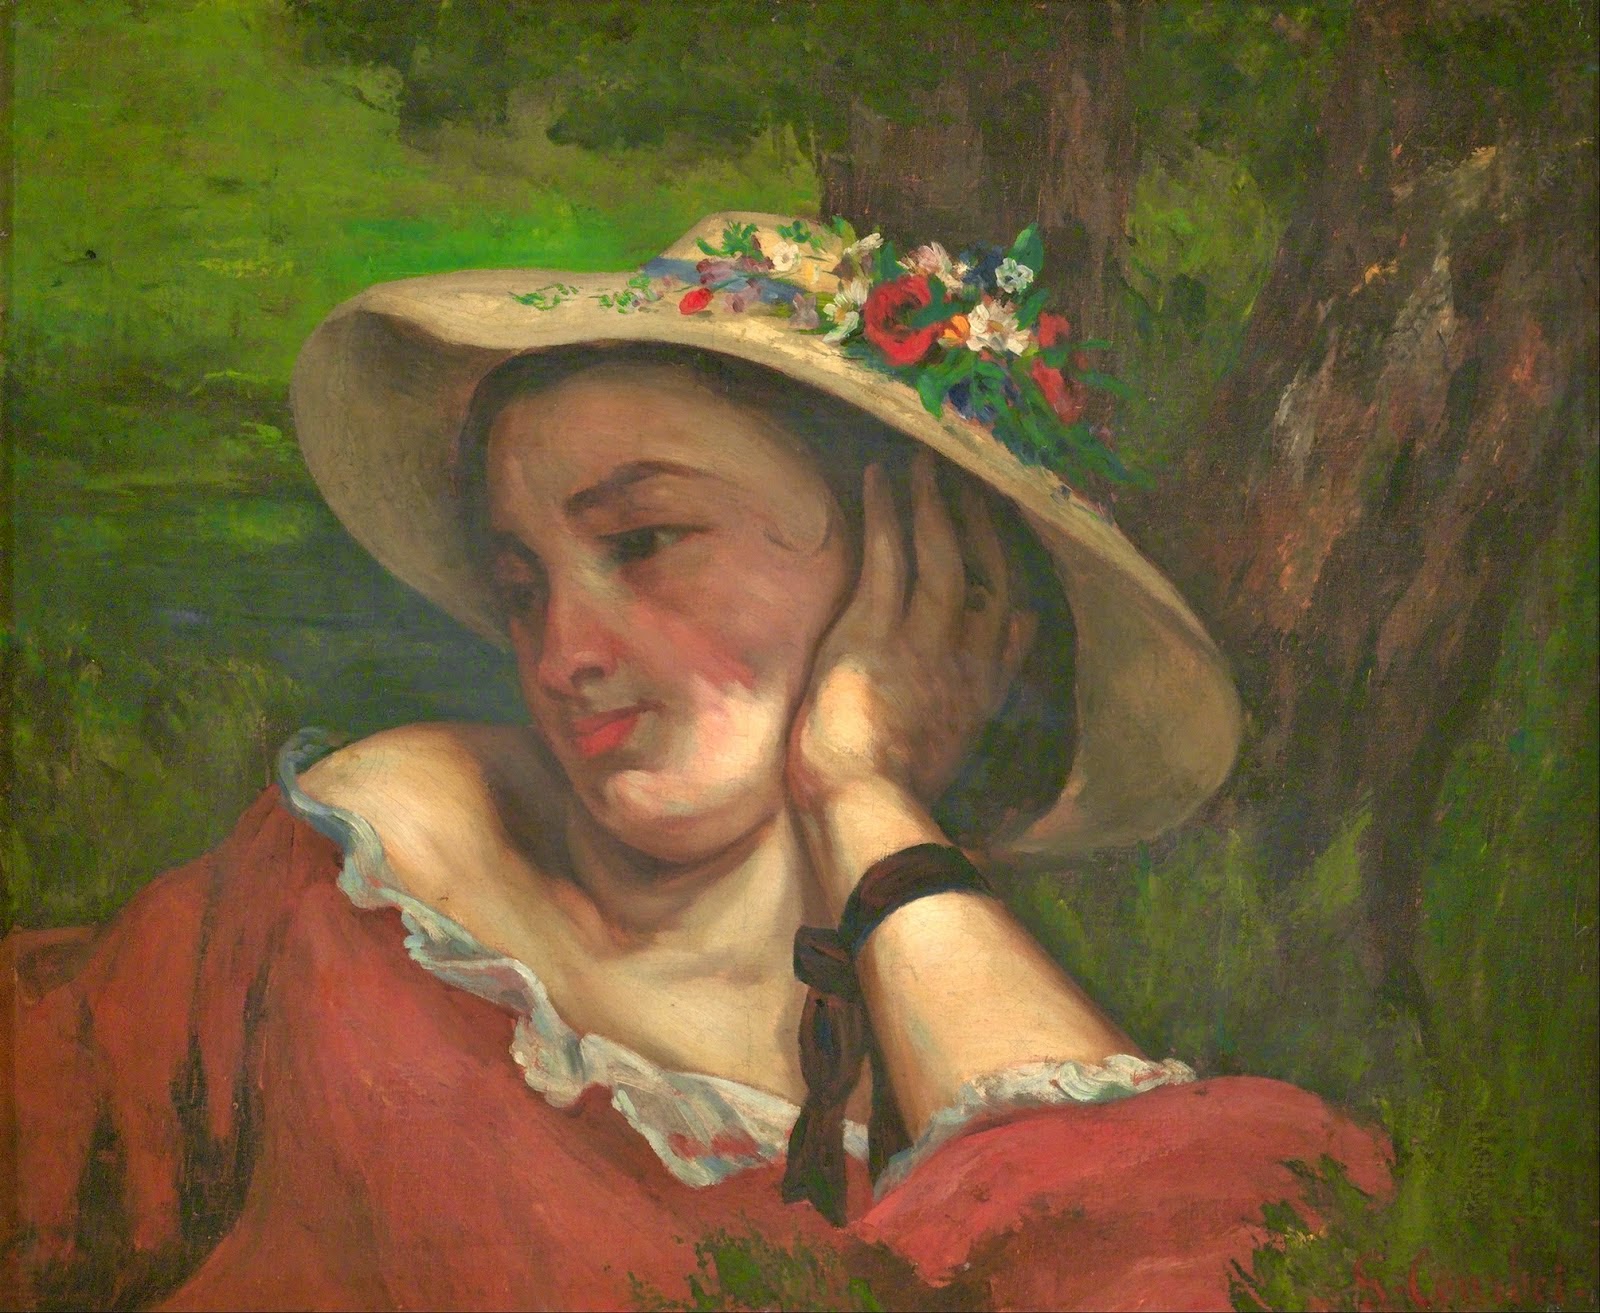 Gustave+Courbet-1819-1877 (40).jpg